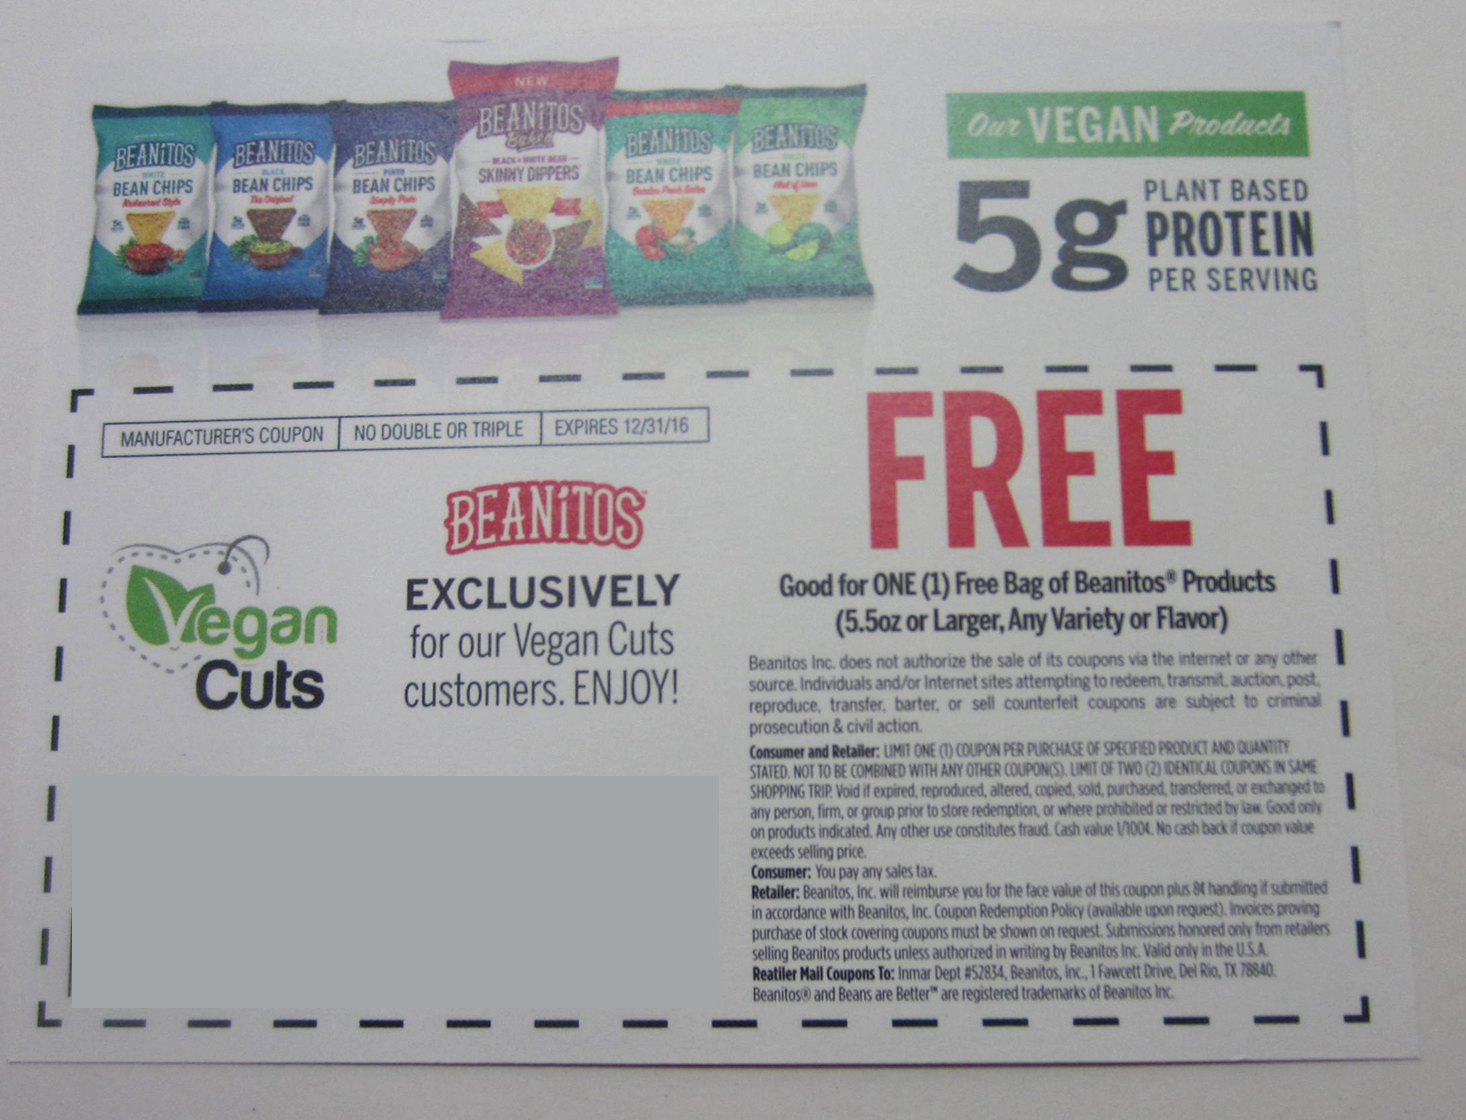 vegan-cuts-snack-september-2016-coupon